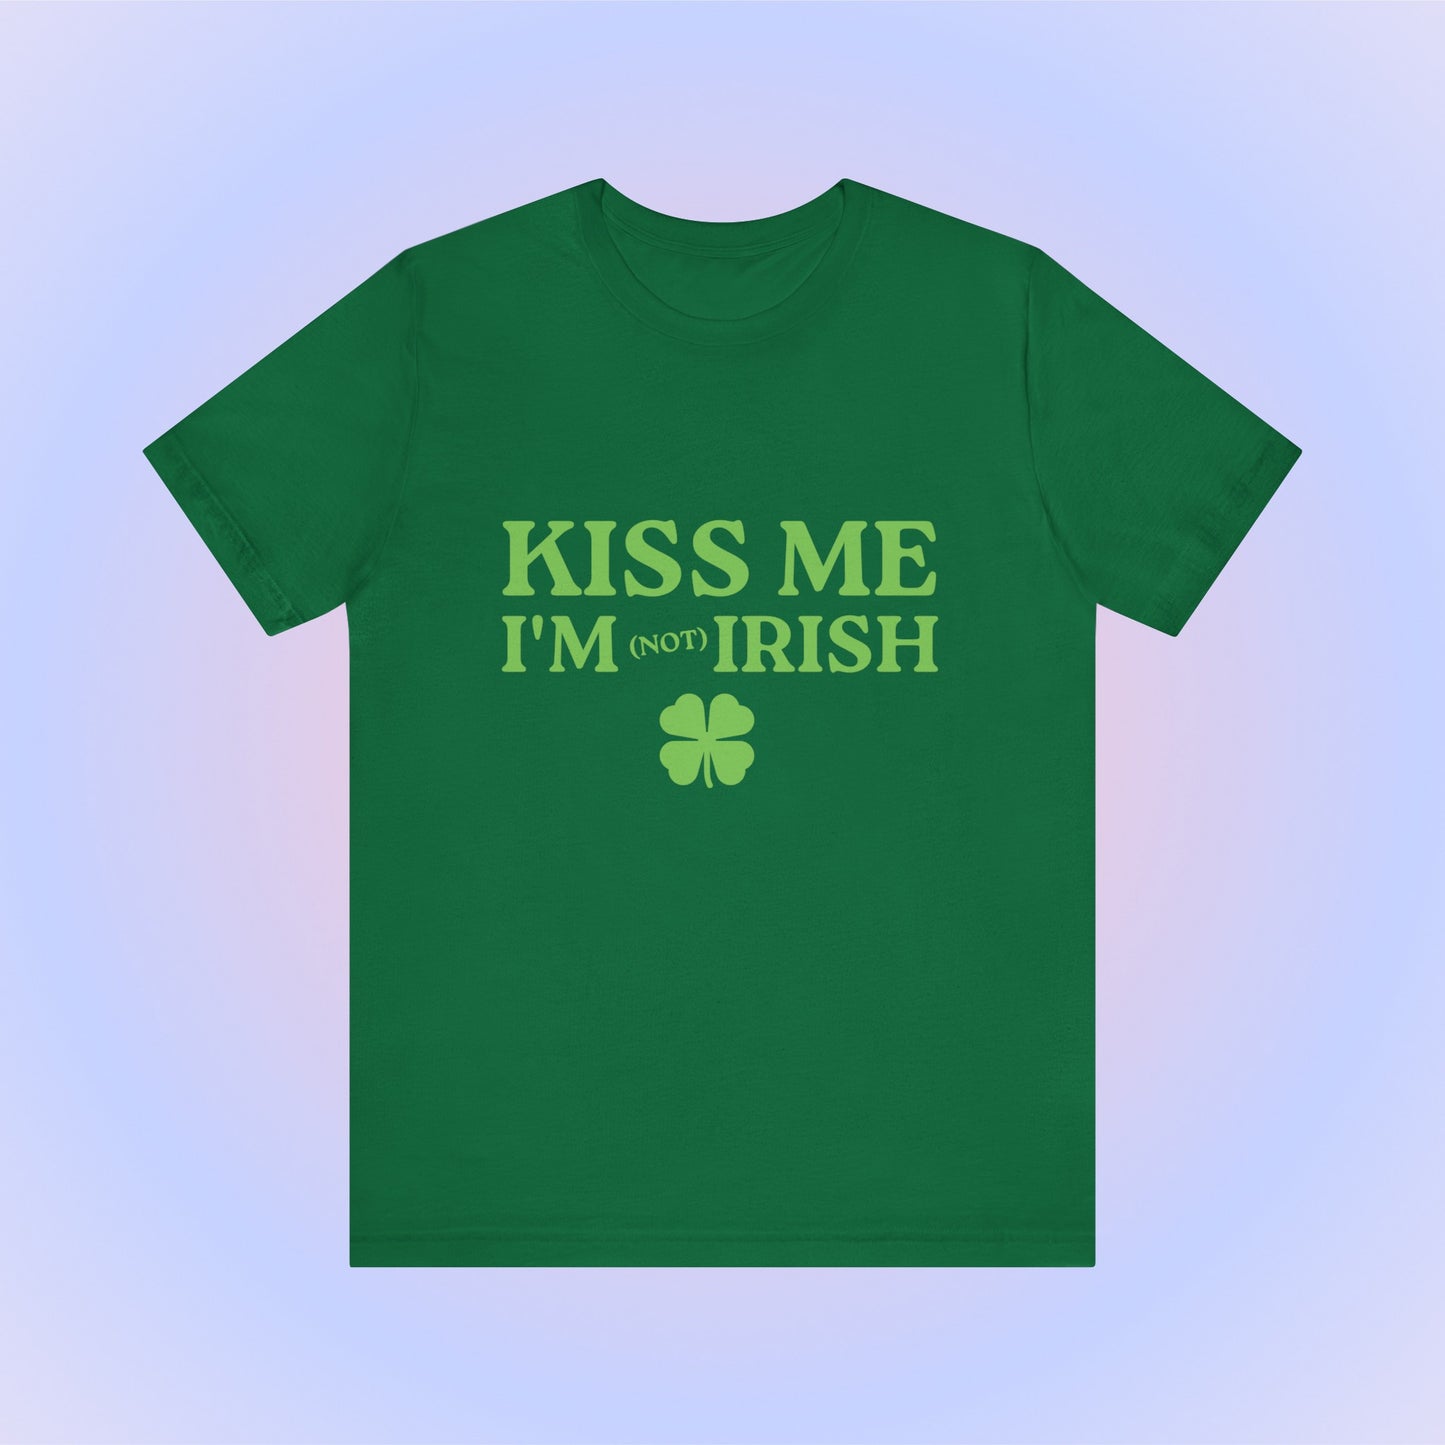 Kiss Me I'm Not Irish, Soft Unisex T-Shirt